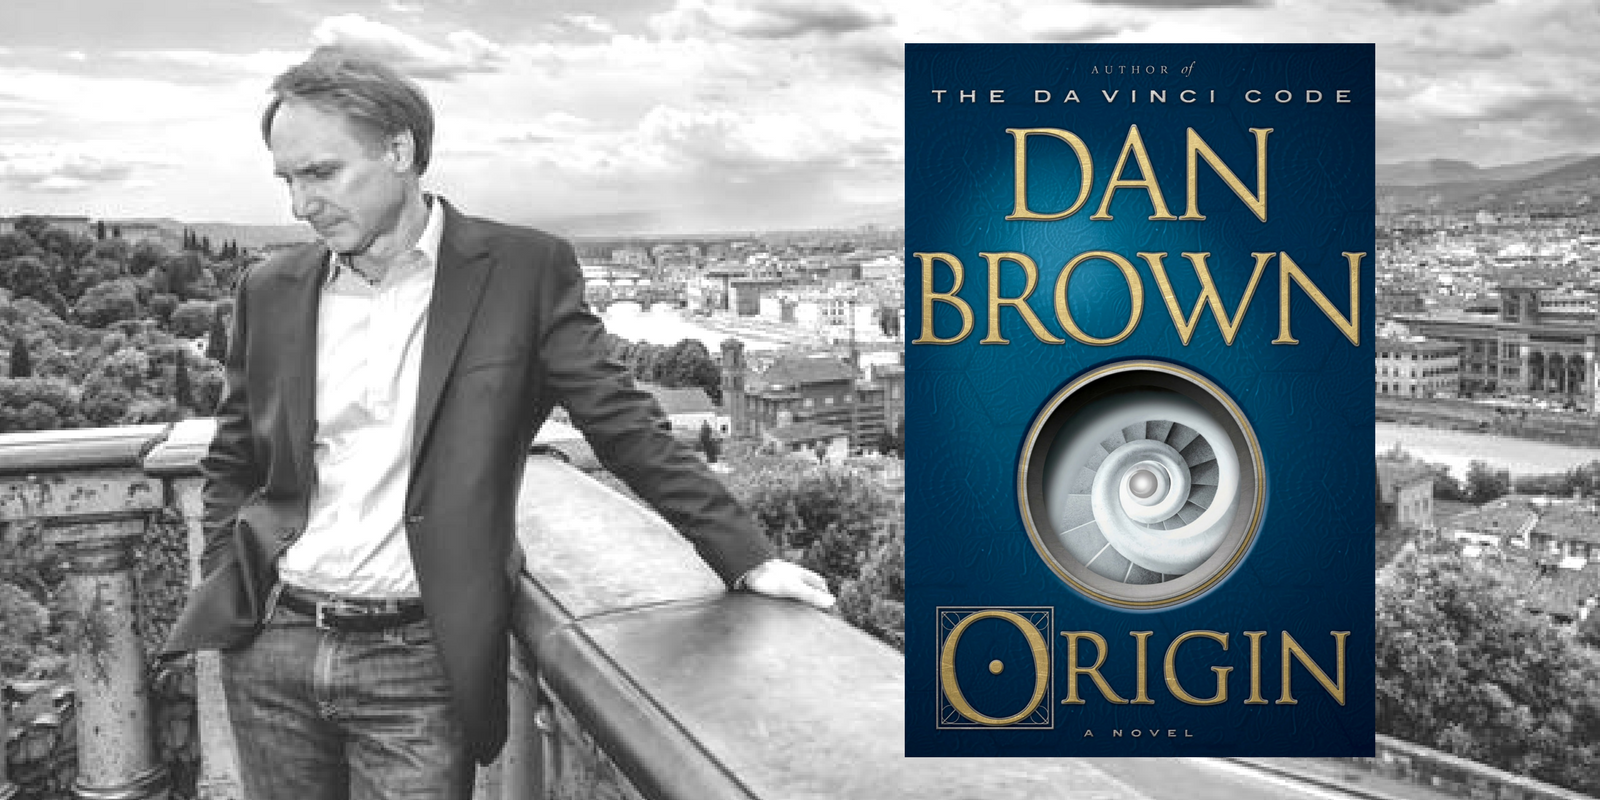 Coming soon: ORIGIN by Dan Brown